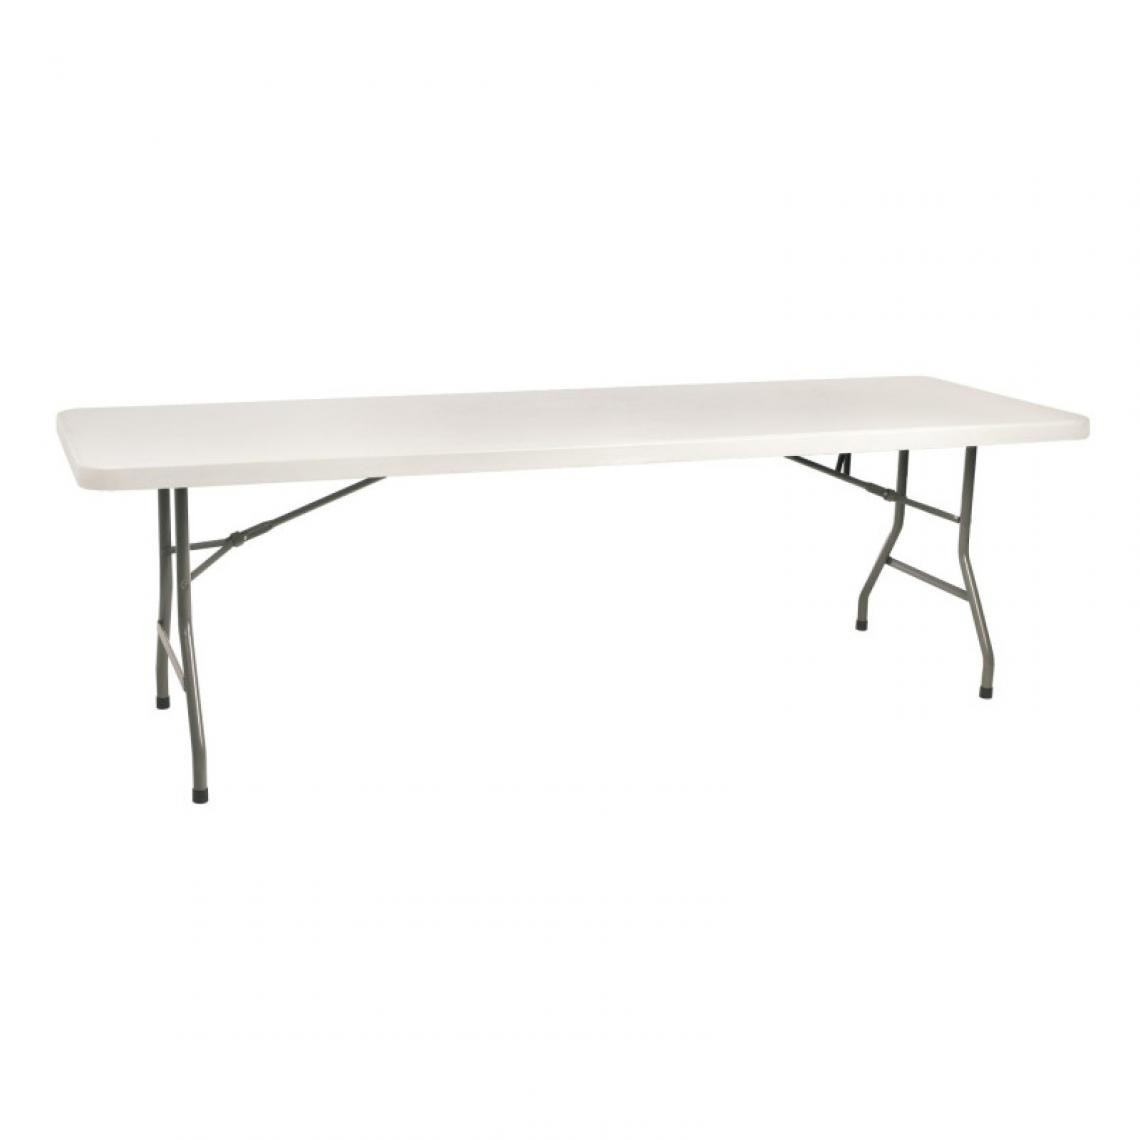 Resol - Table Wagner 240x80 - RESOL - polyéthylène, acier peint - Tables à manger